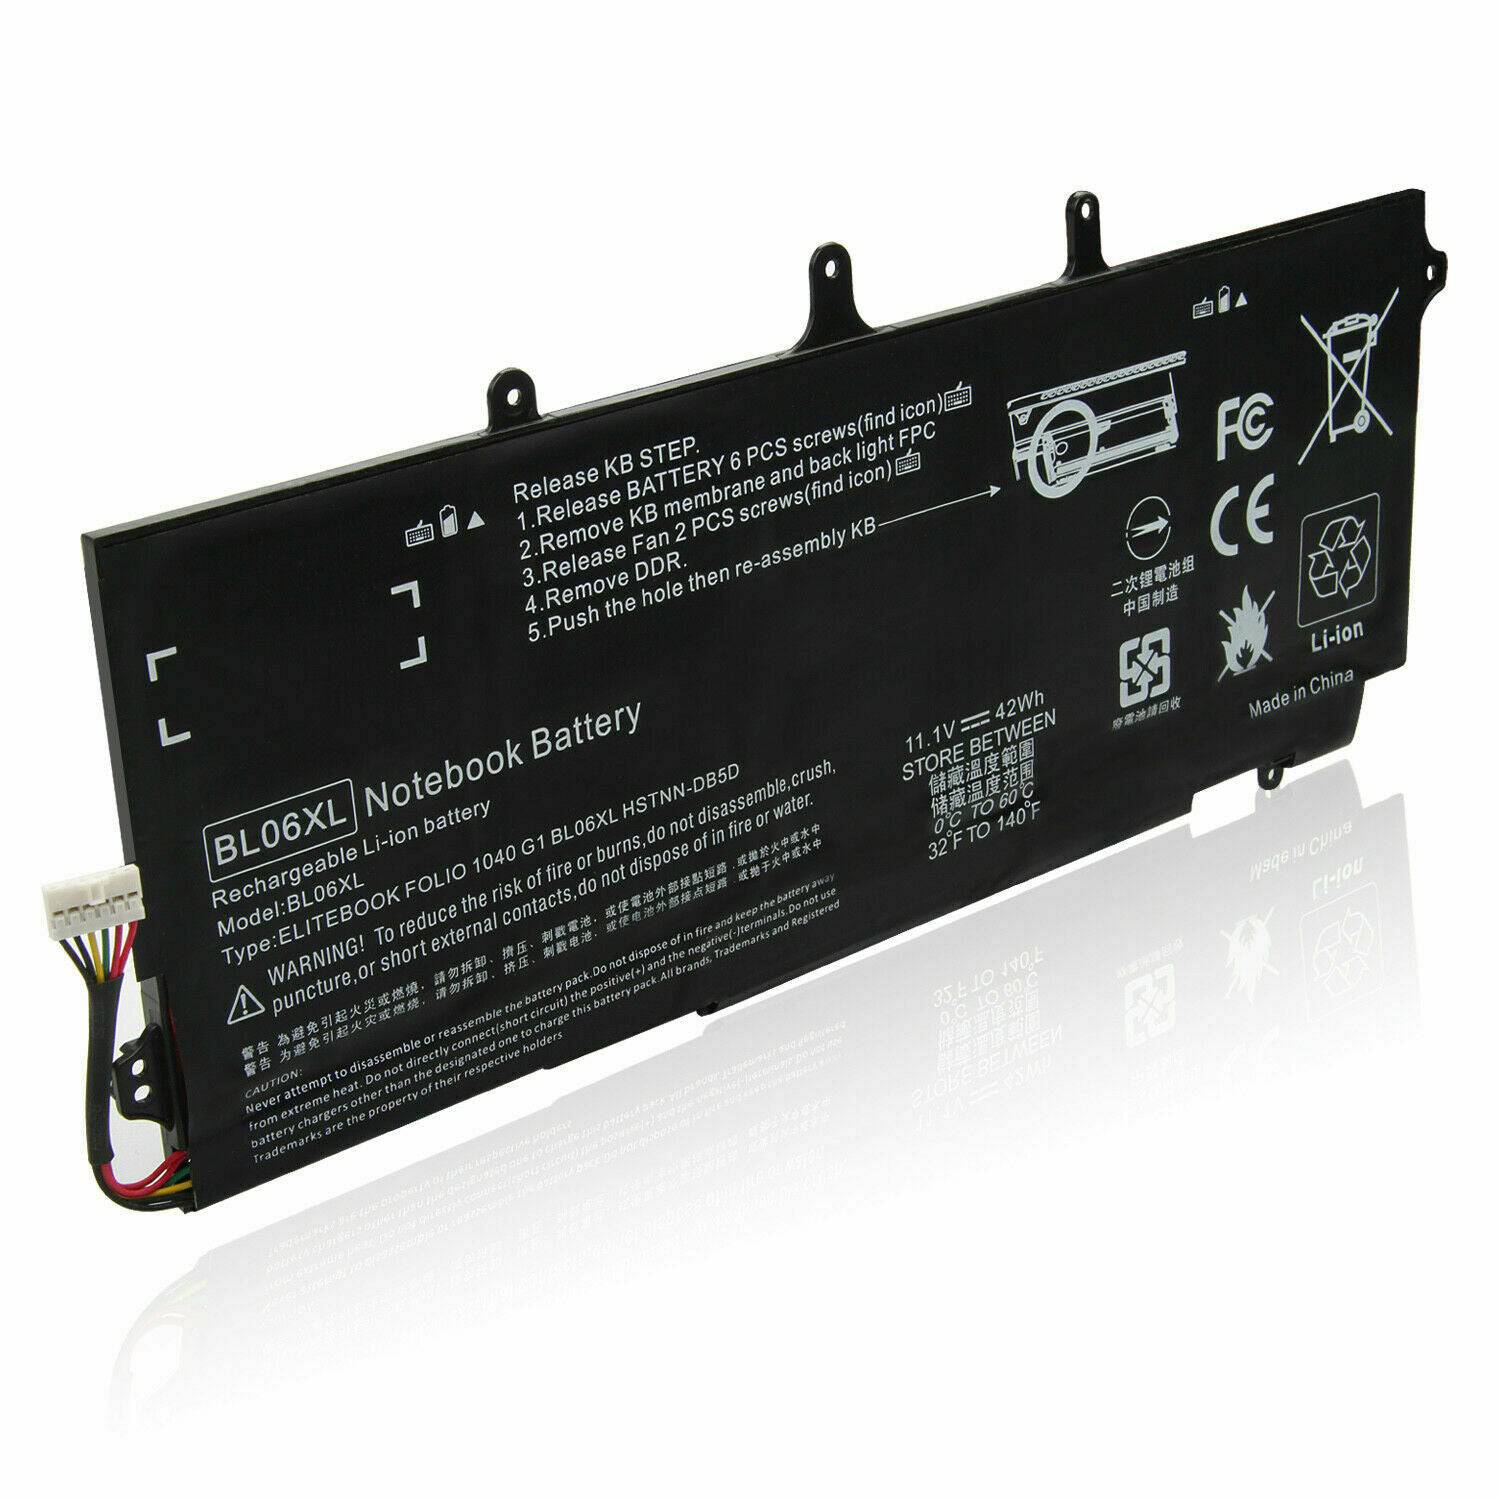 FAST Charging BL06XL Battery for HP EliteBook Folio 1040 G1, 1040 G2 722297-001